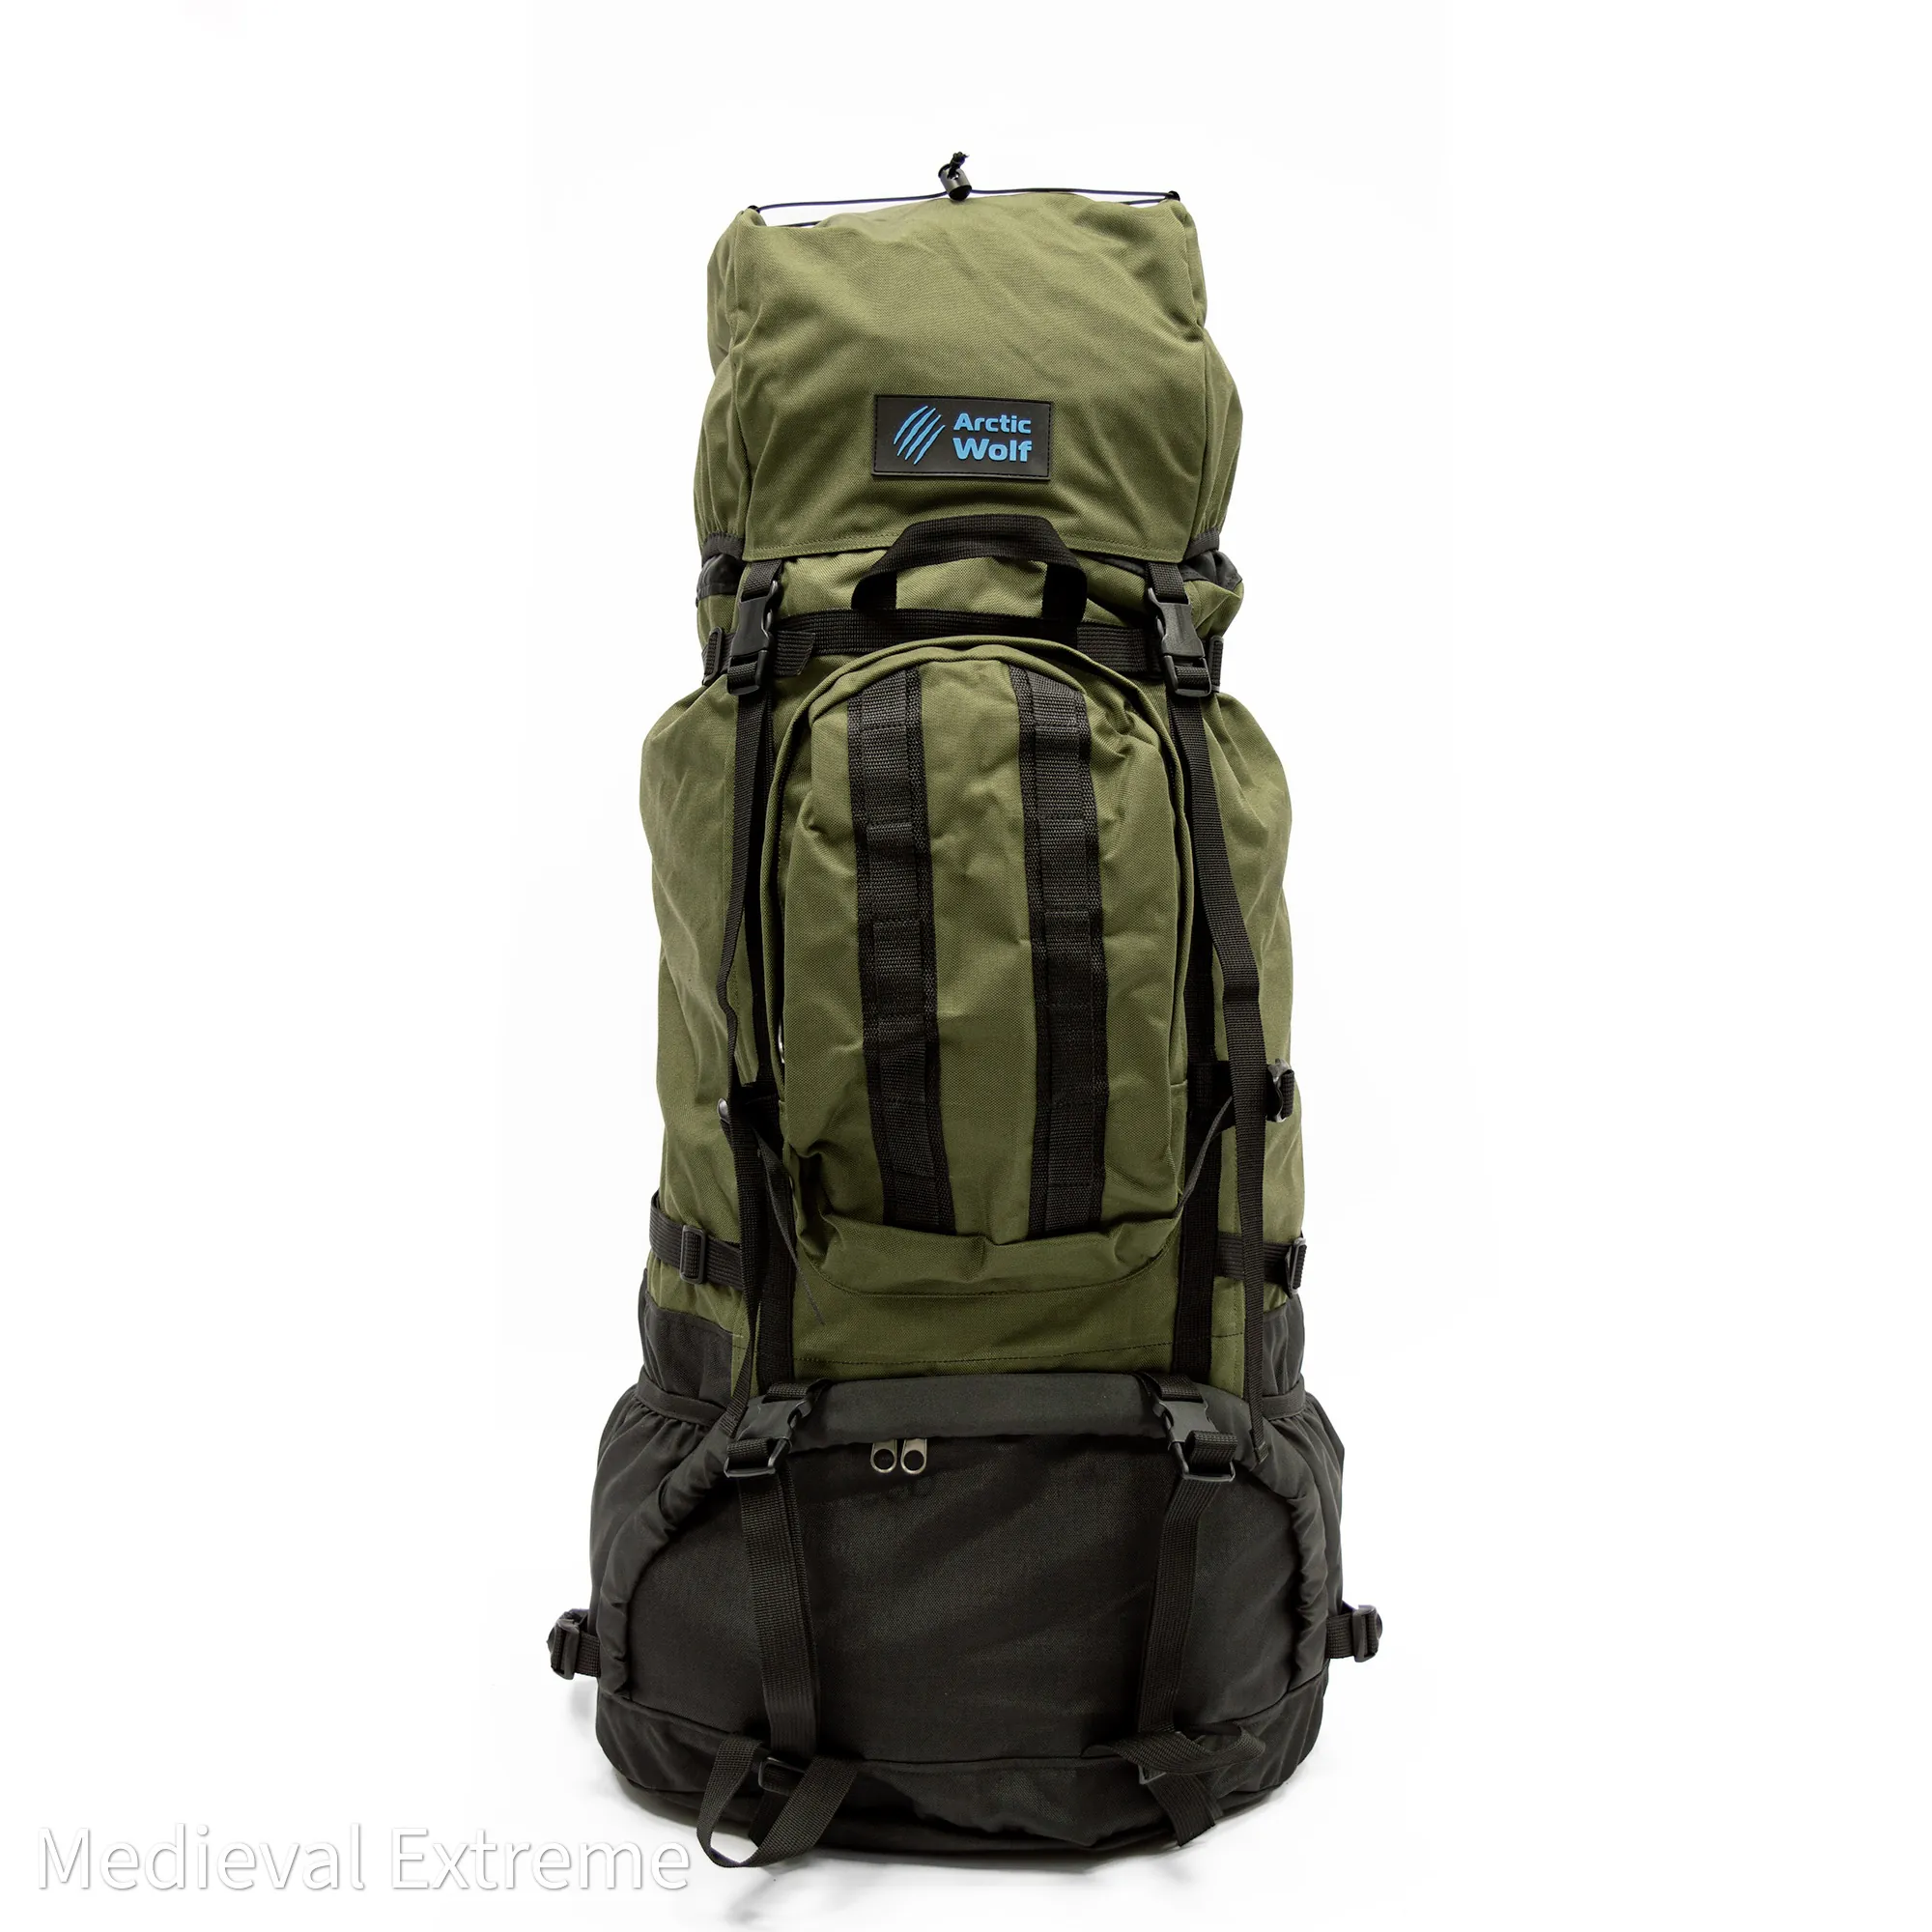 Backpack for armor 125 liters olive front